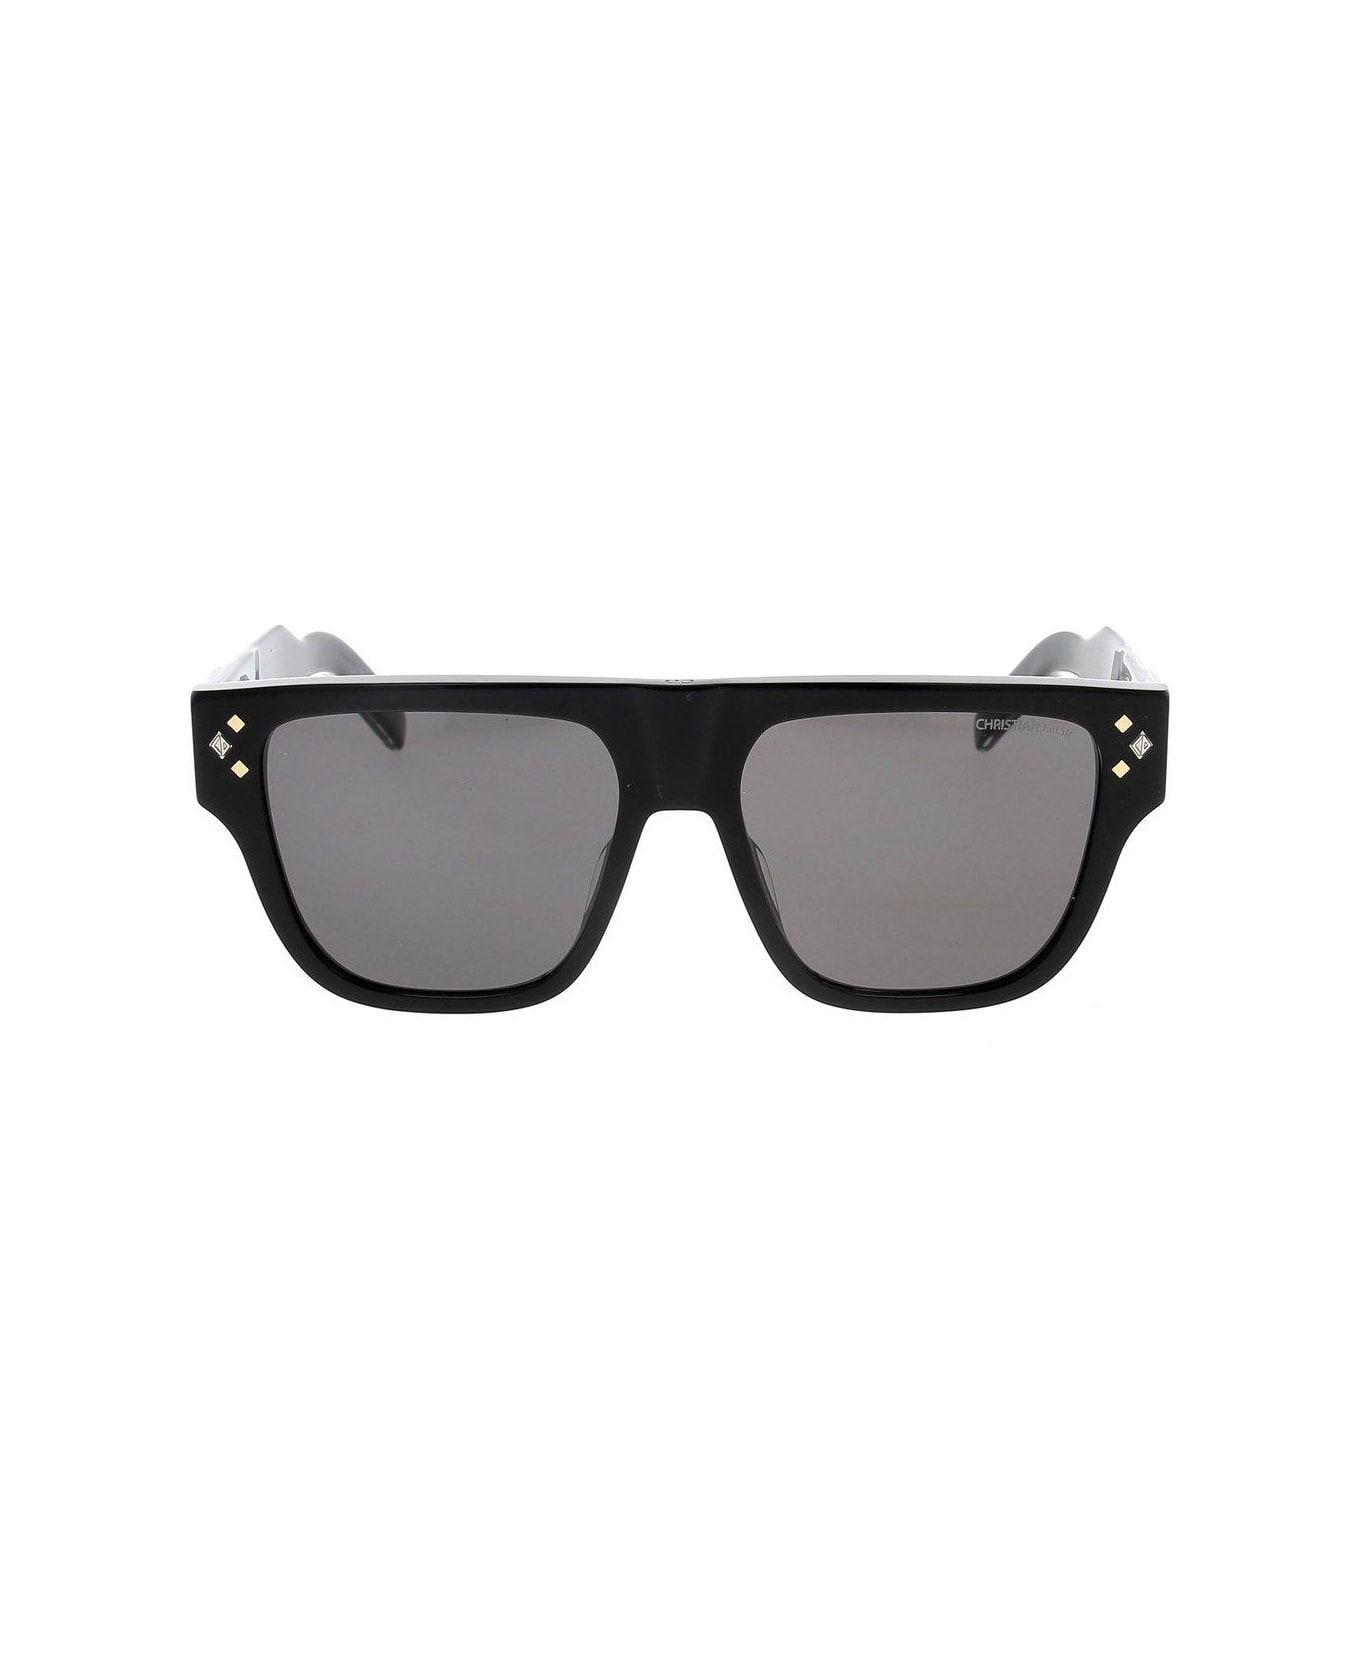 Dior Eyewear Square Frame Sunglasses - 10a0